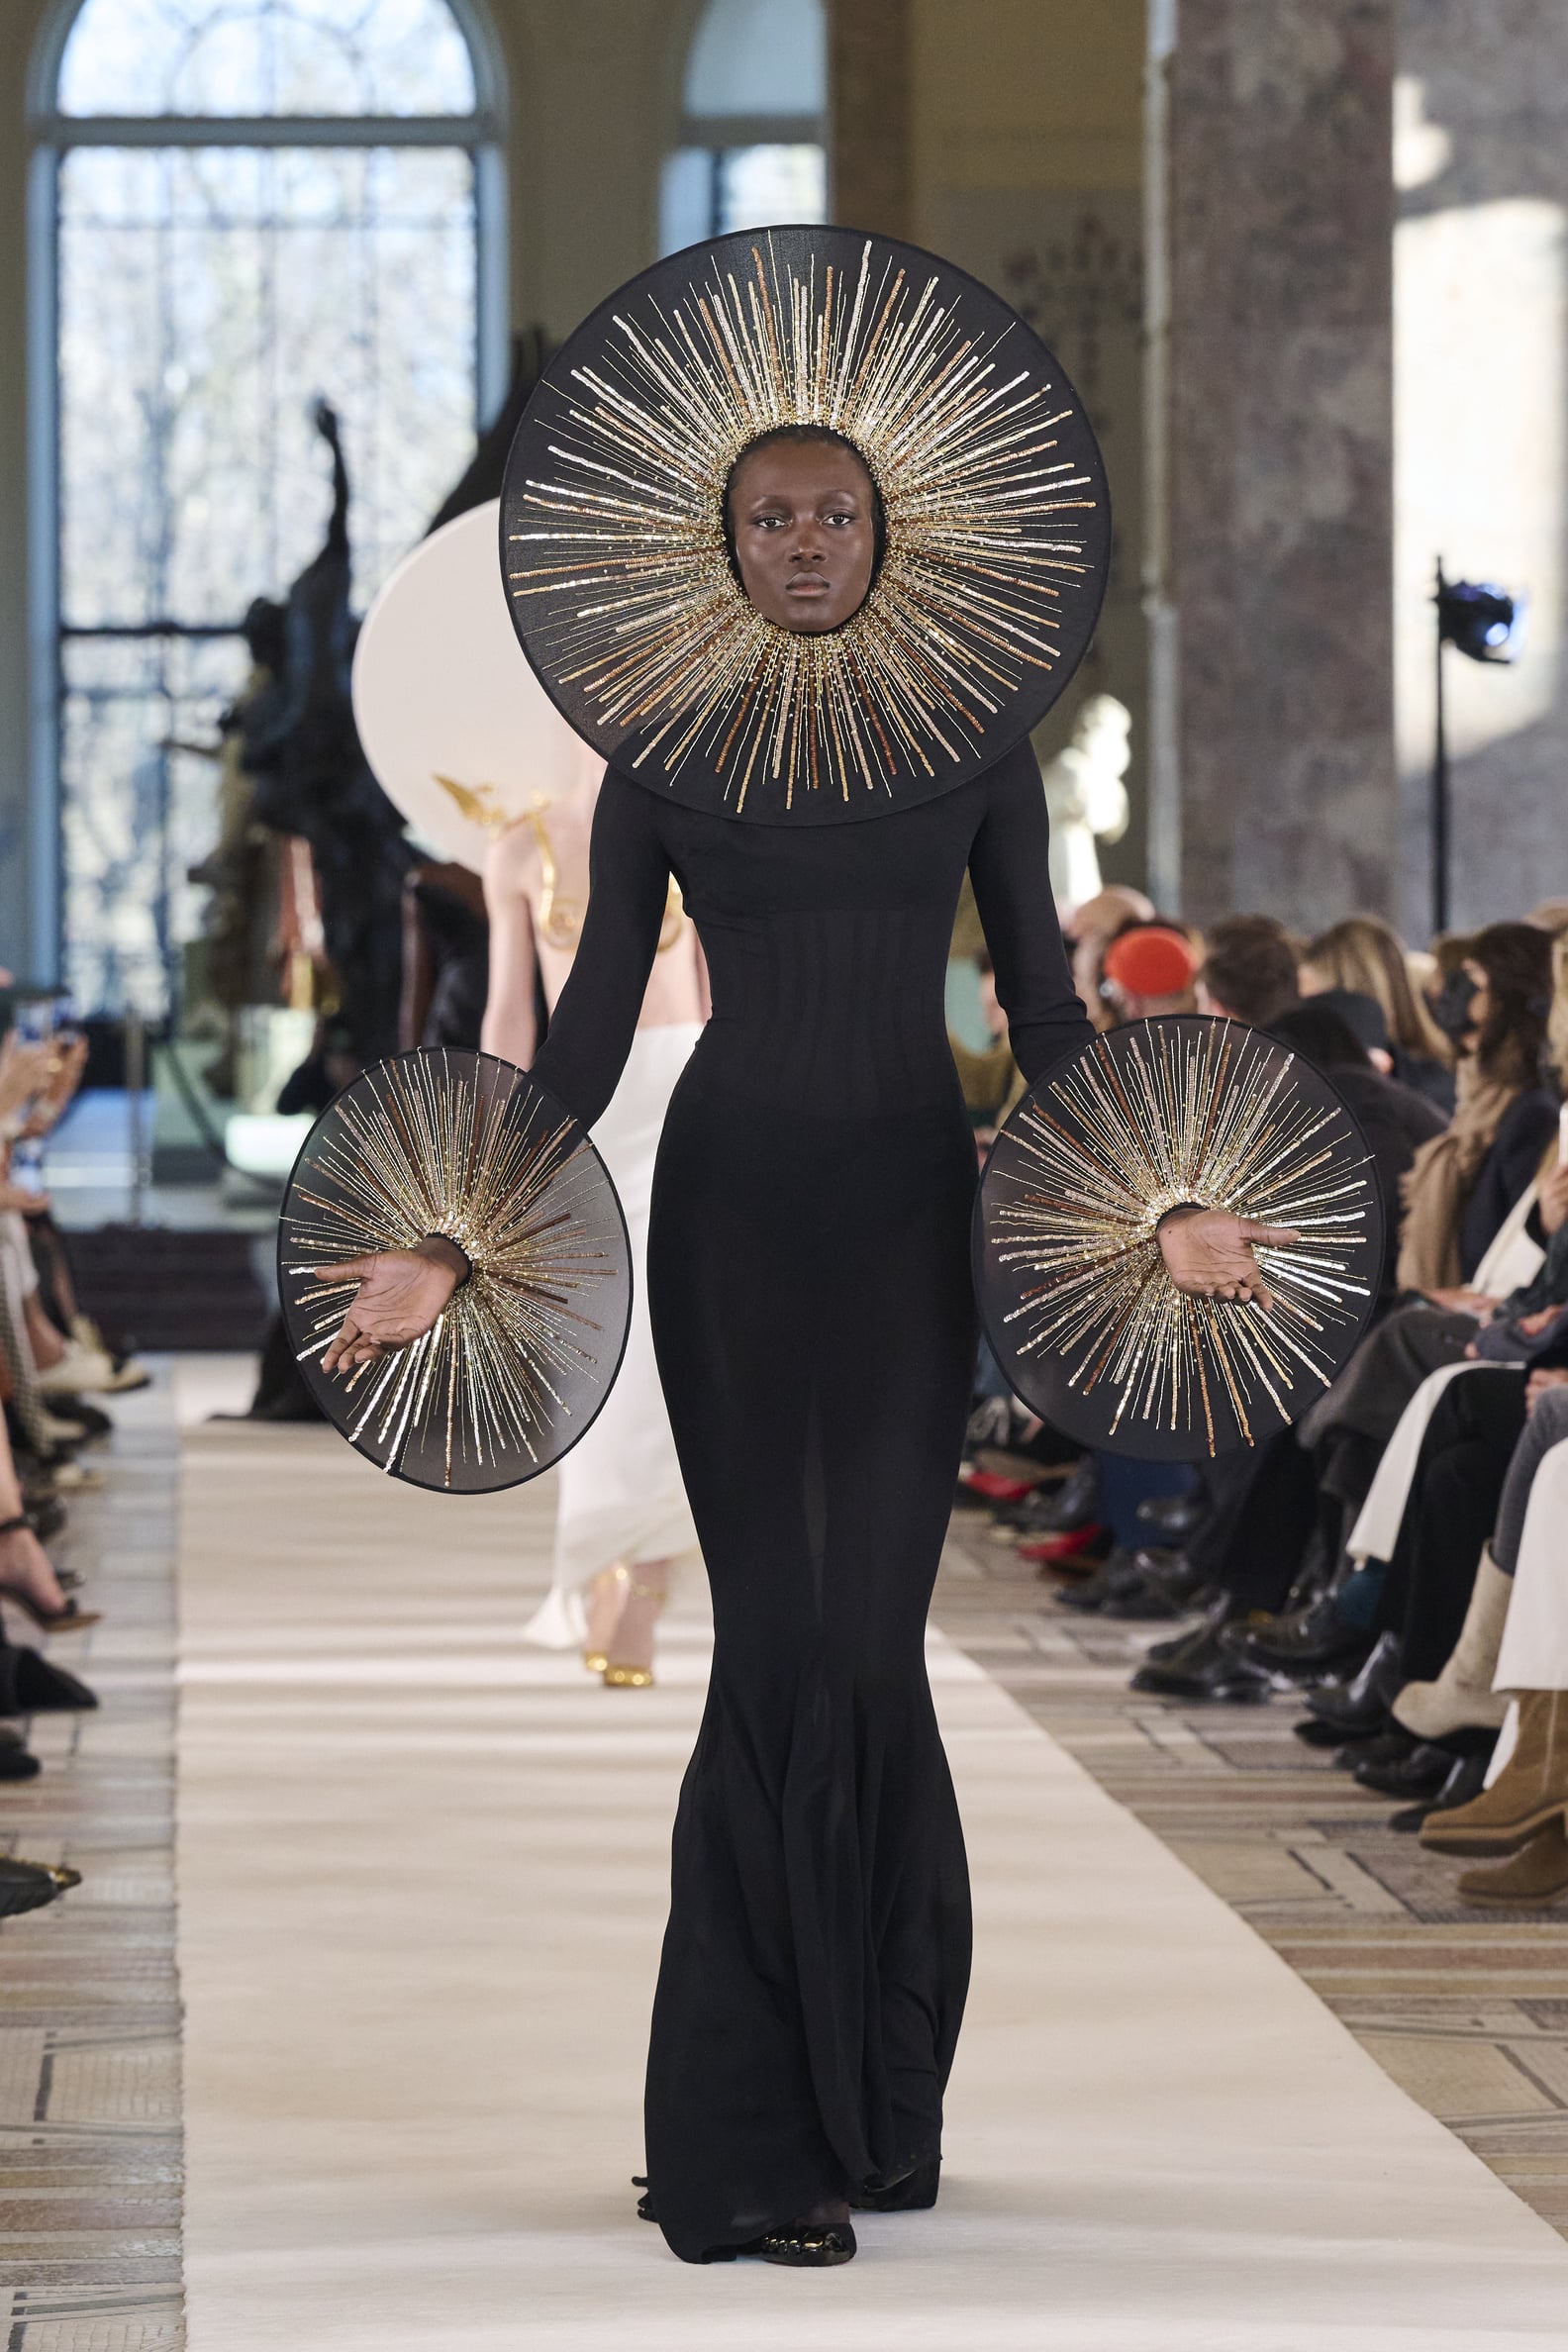 Zendaya Stuns in Futuristic Outfits For W Magazine Cover | POPSUGAR Fashion